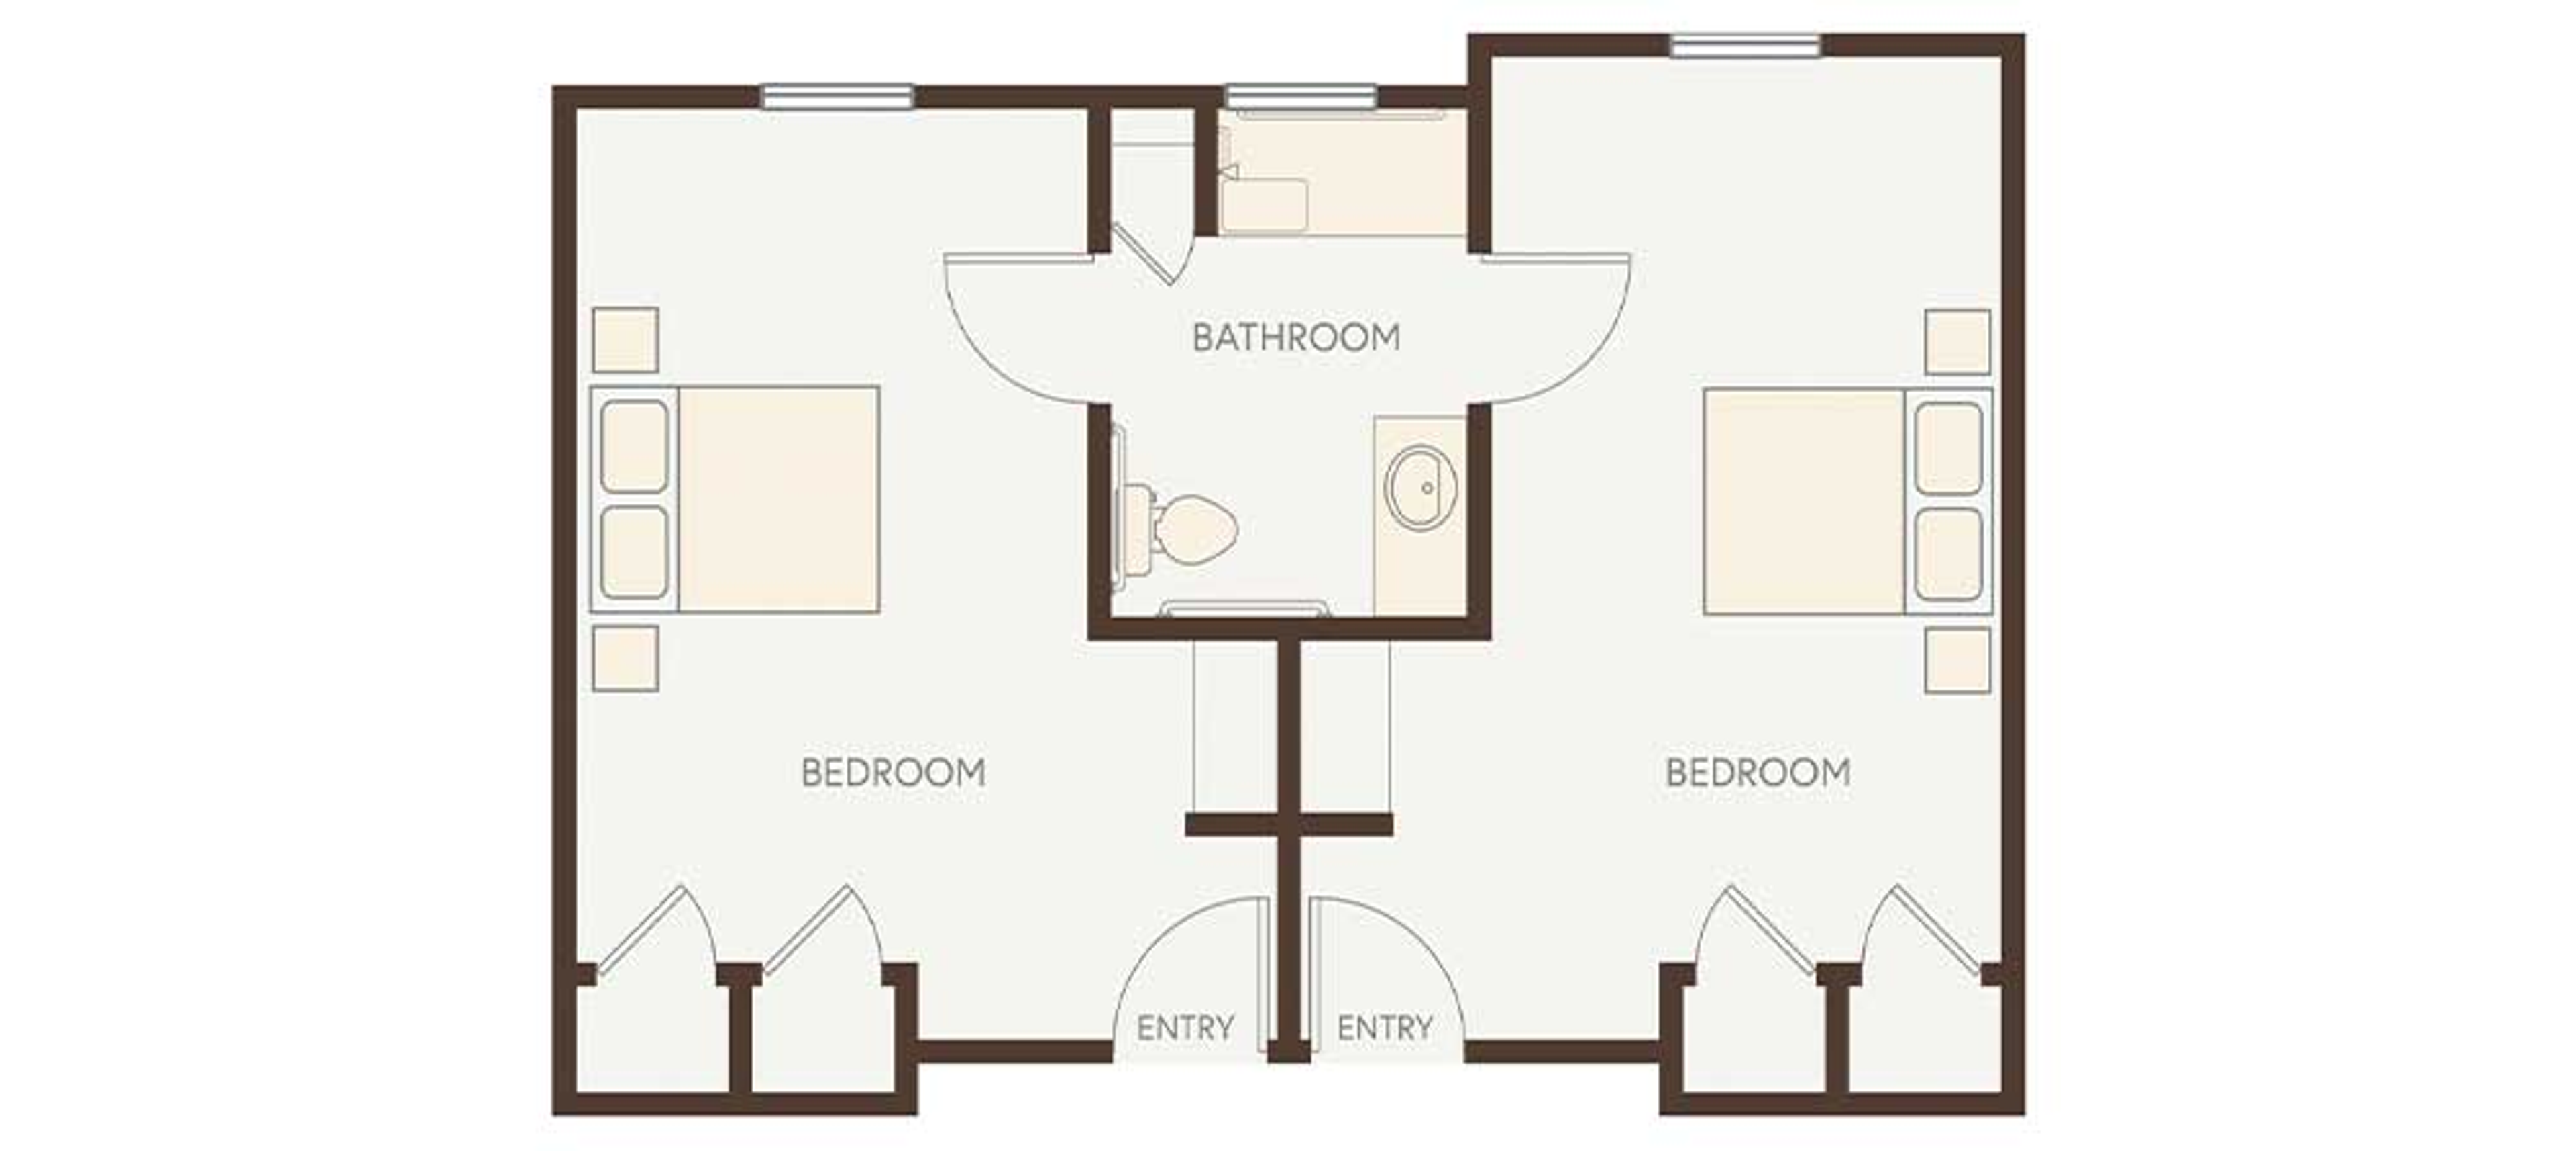 Floorplan - Heartis San Antonio - 2 beds, 1 bath, 290 sq. ft. Memory Care